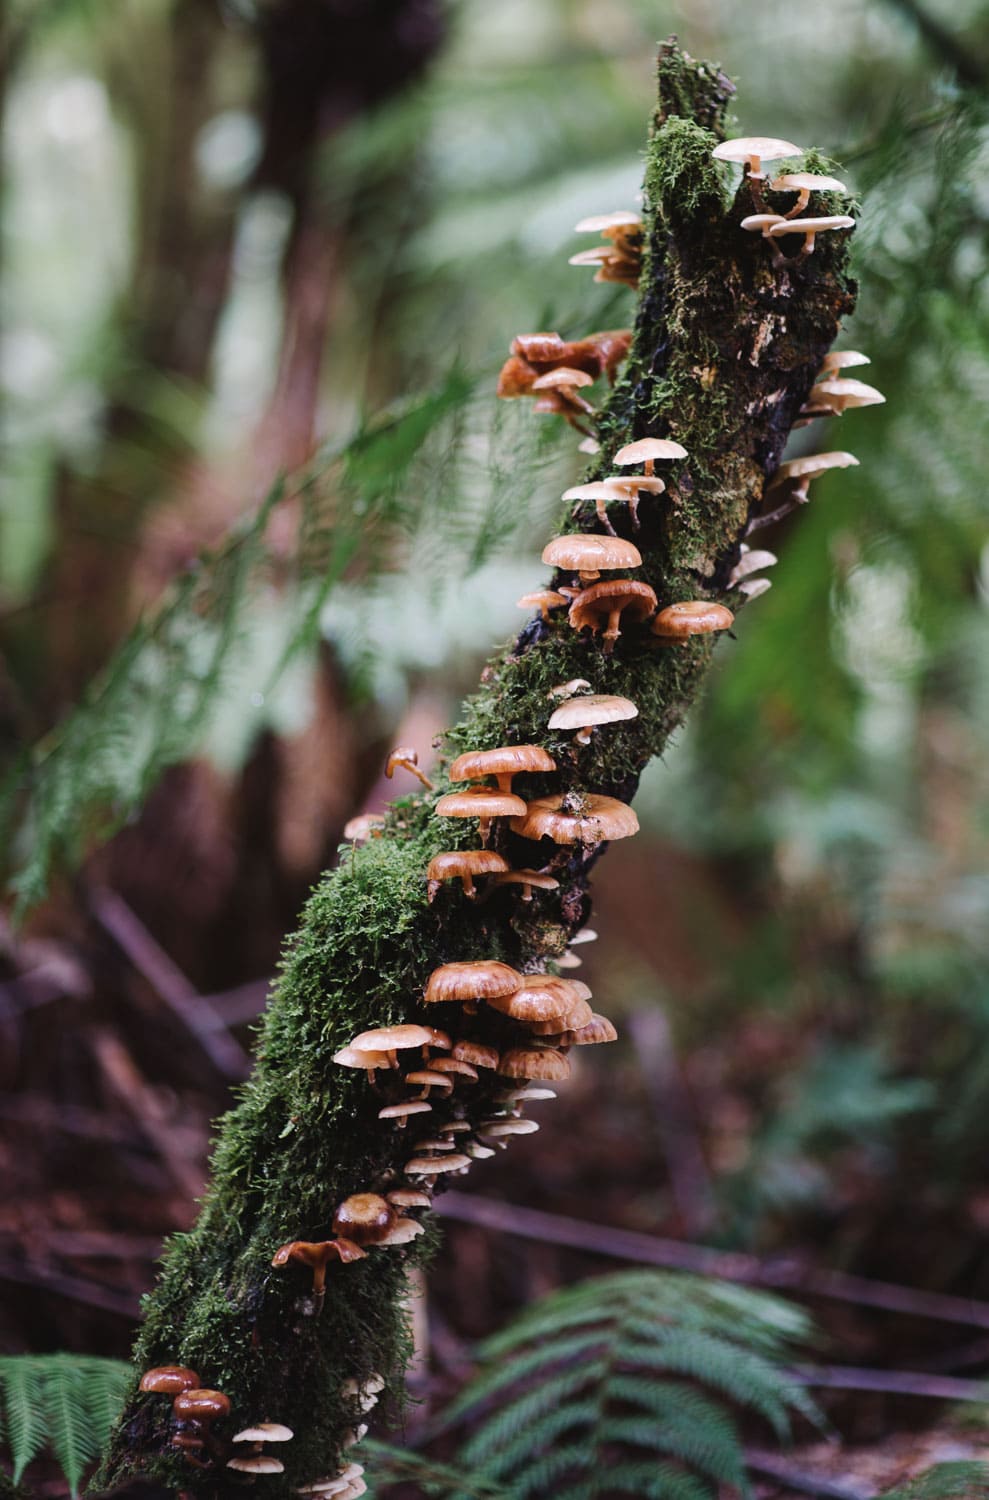 Mushrooms in the Redwoods